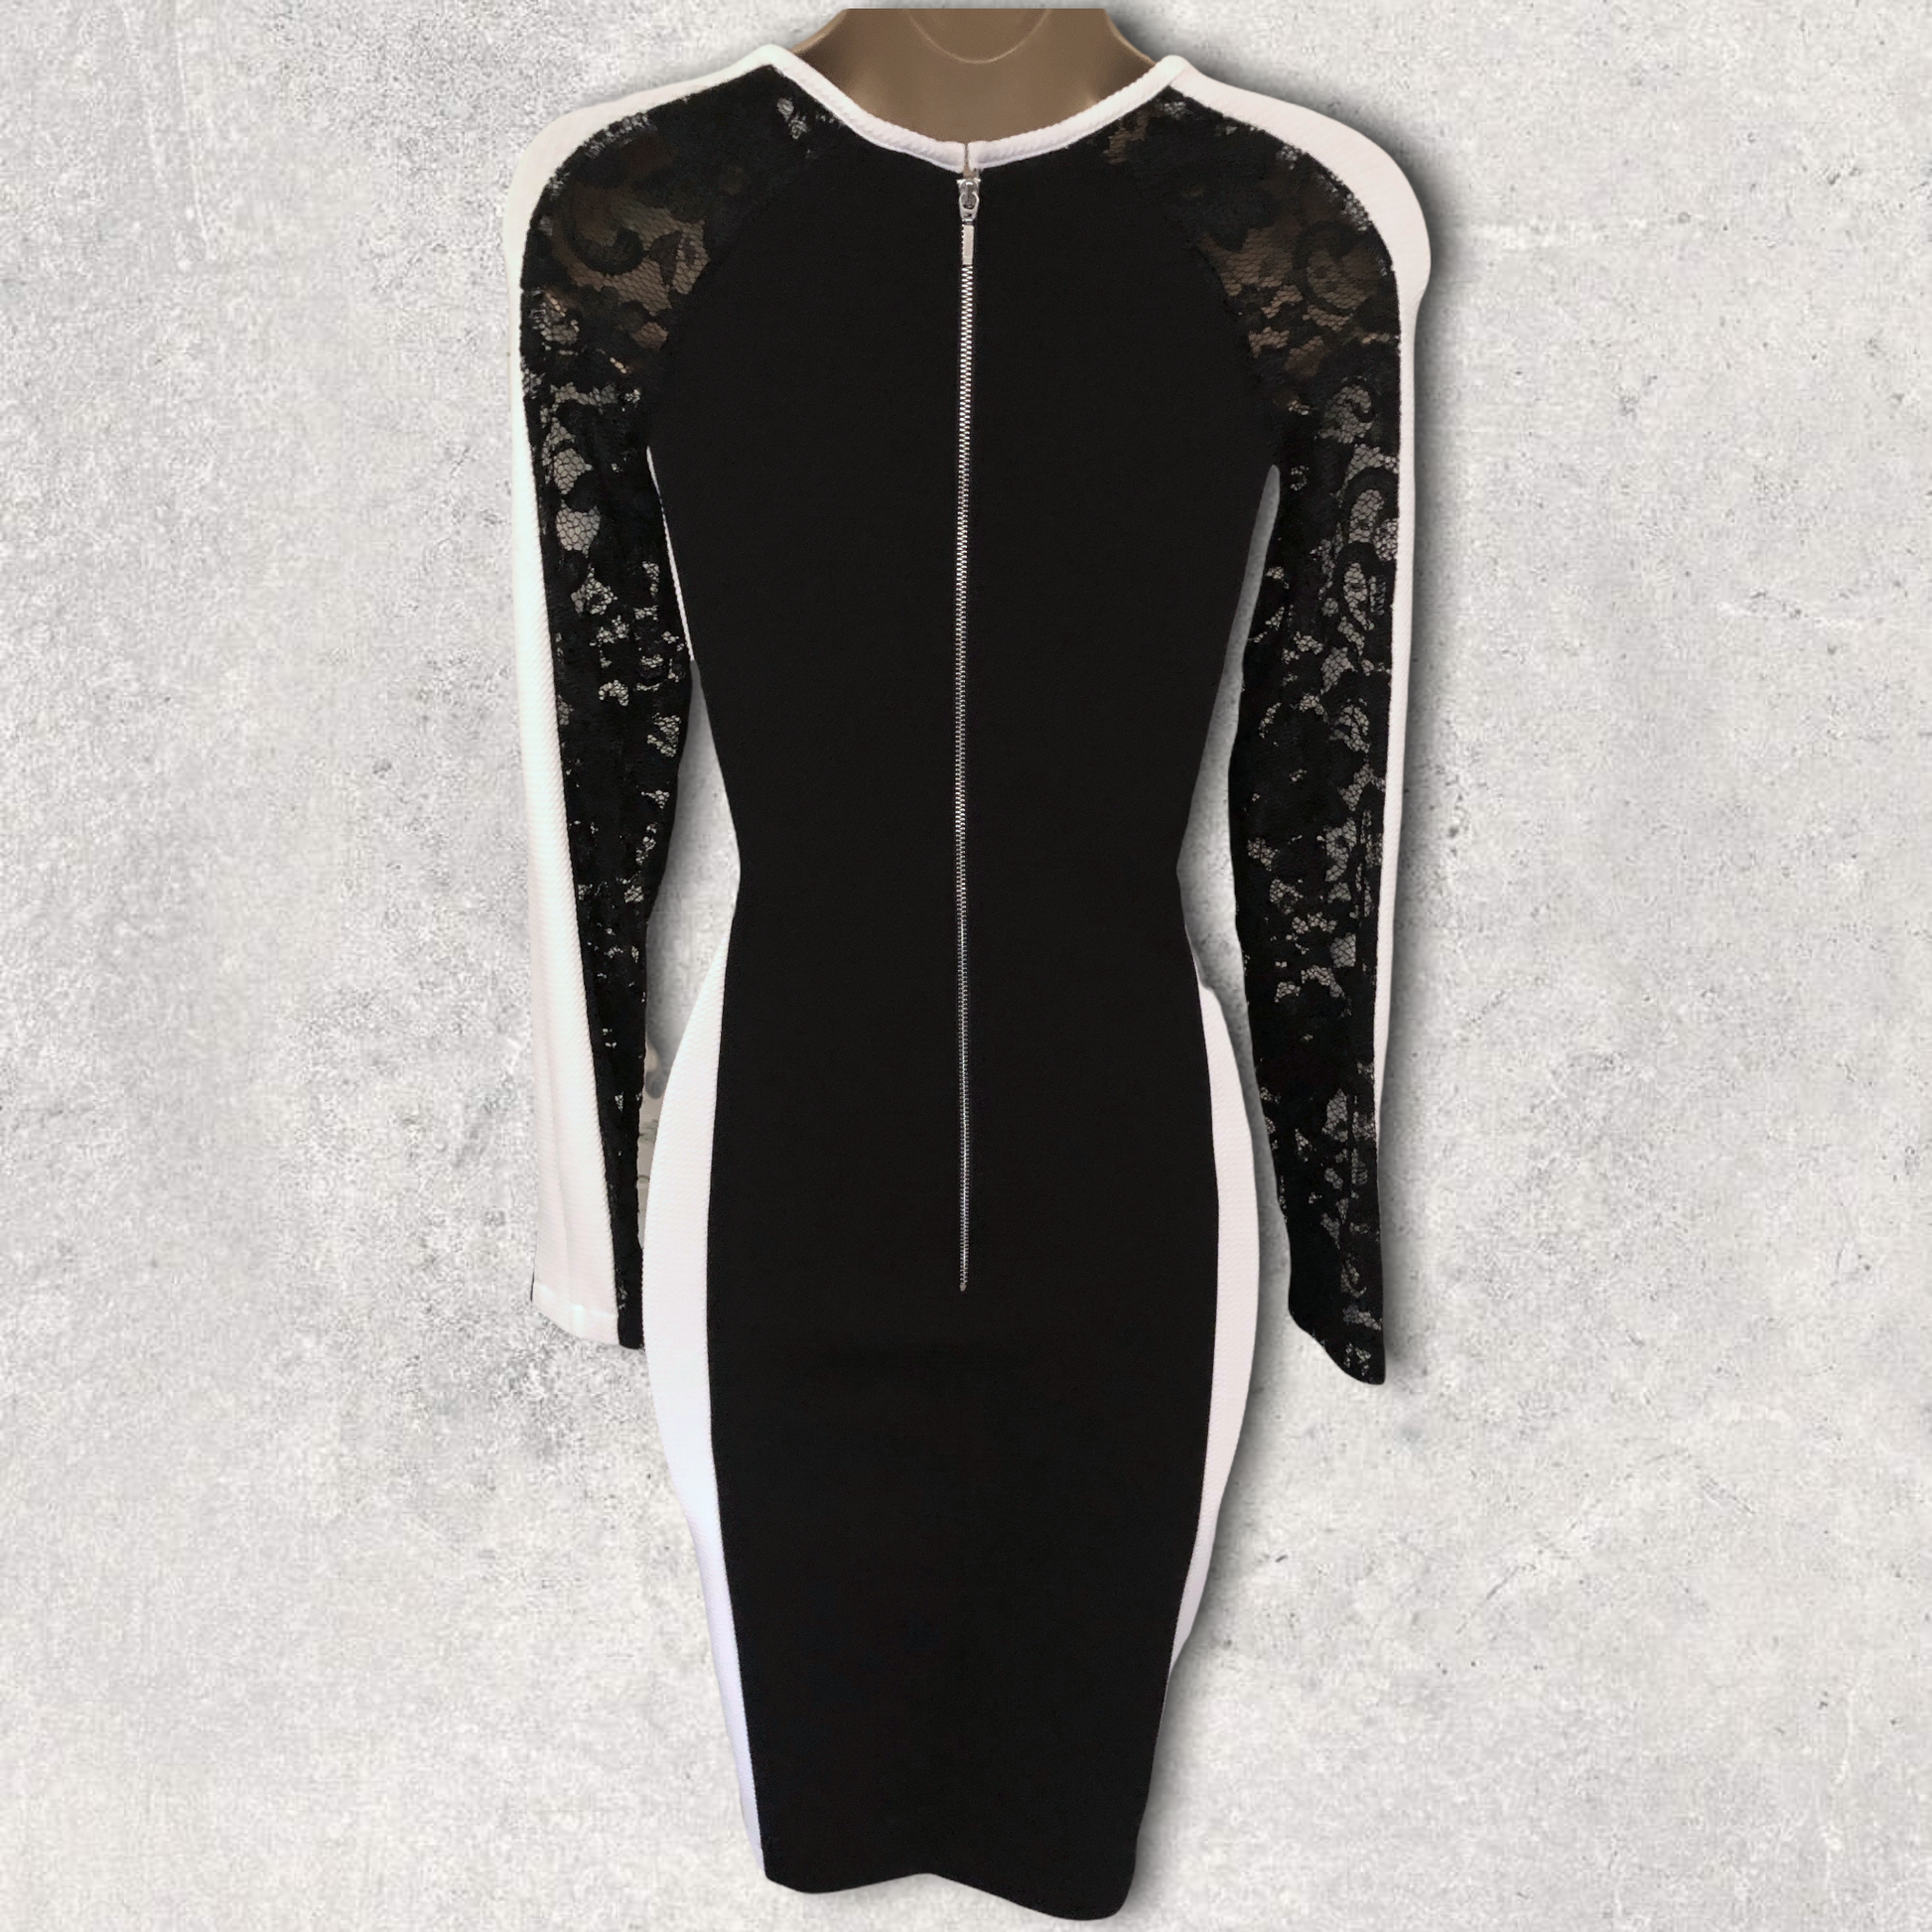 Joseph Ribkoff Black & Vanilla Stretch Silhouette Dress UK 10 US 6 EU 38 BNWT RRP £220 Timeless Fashions